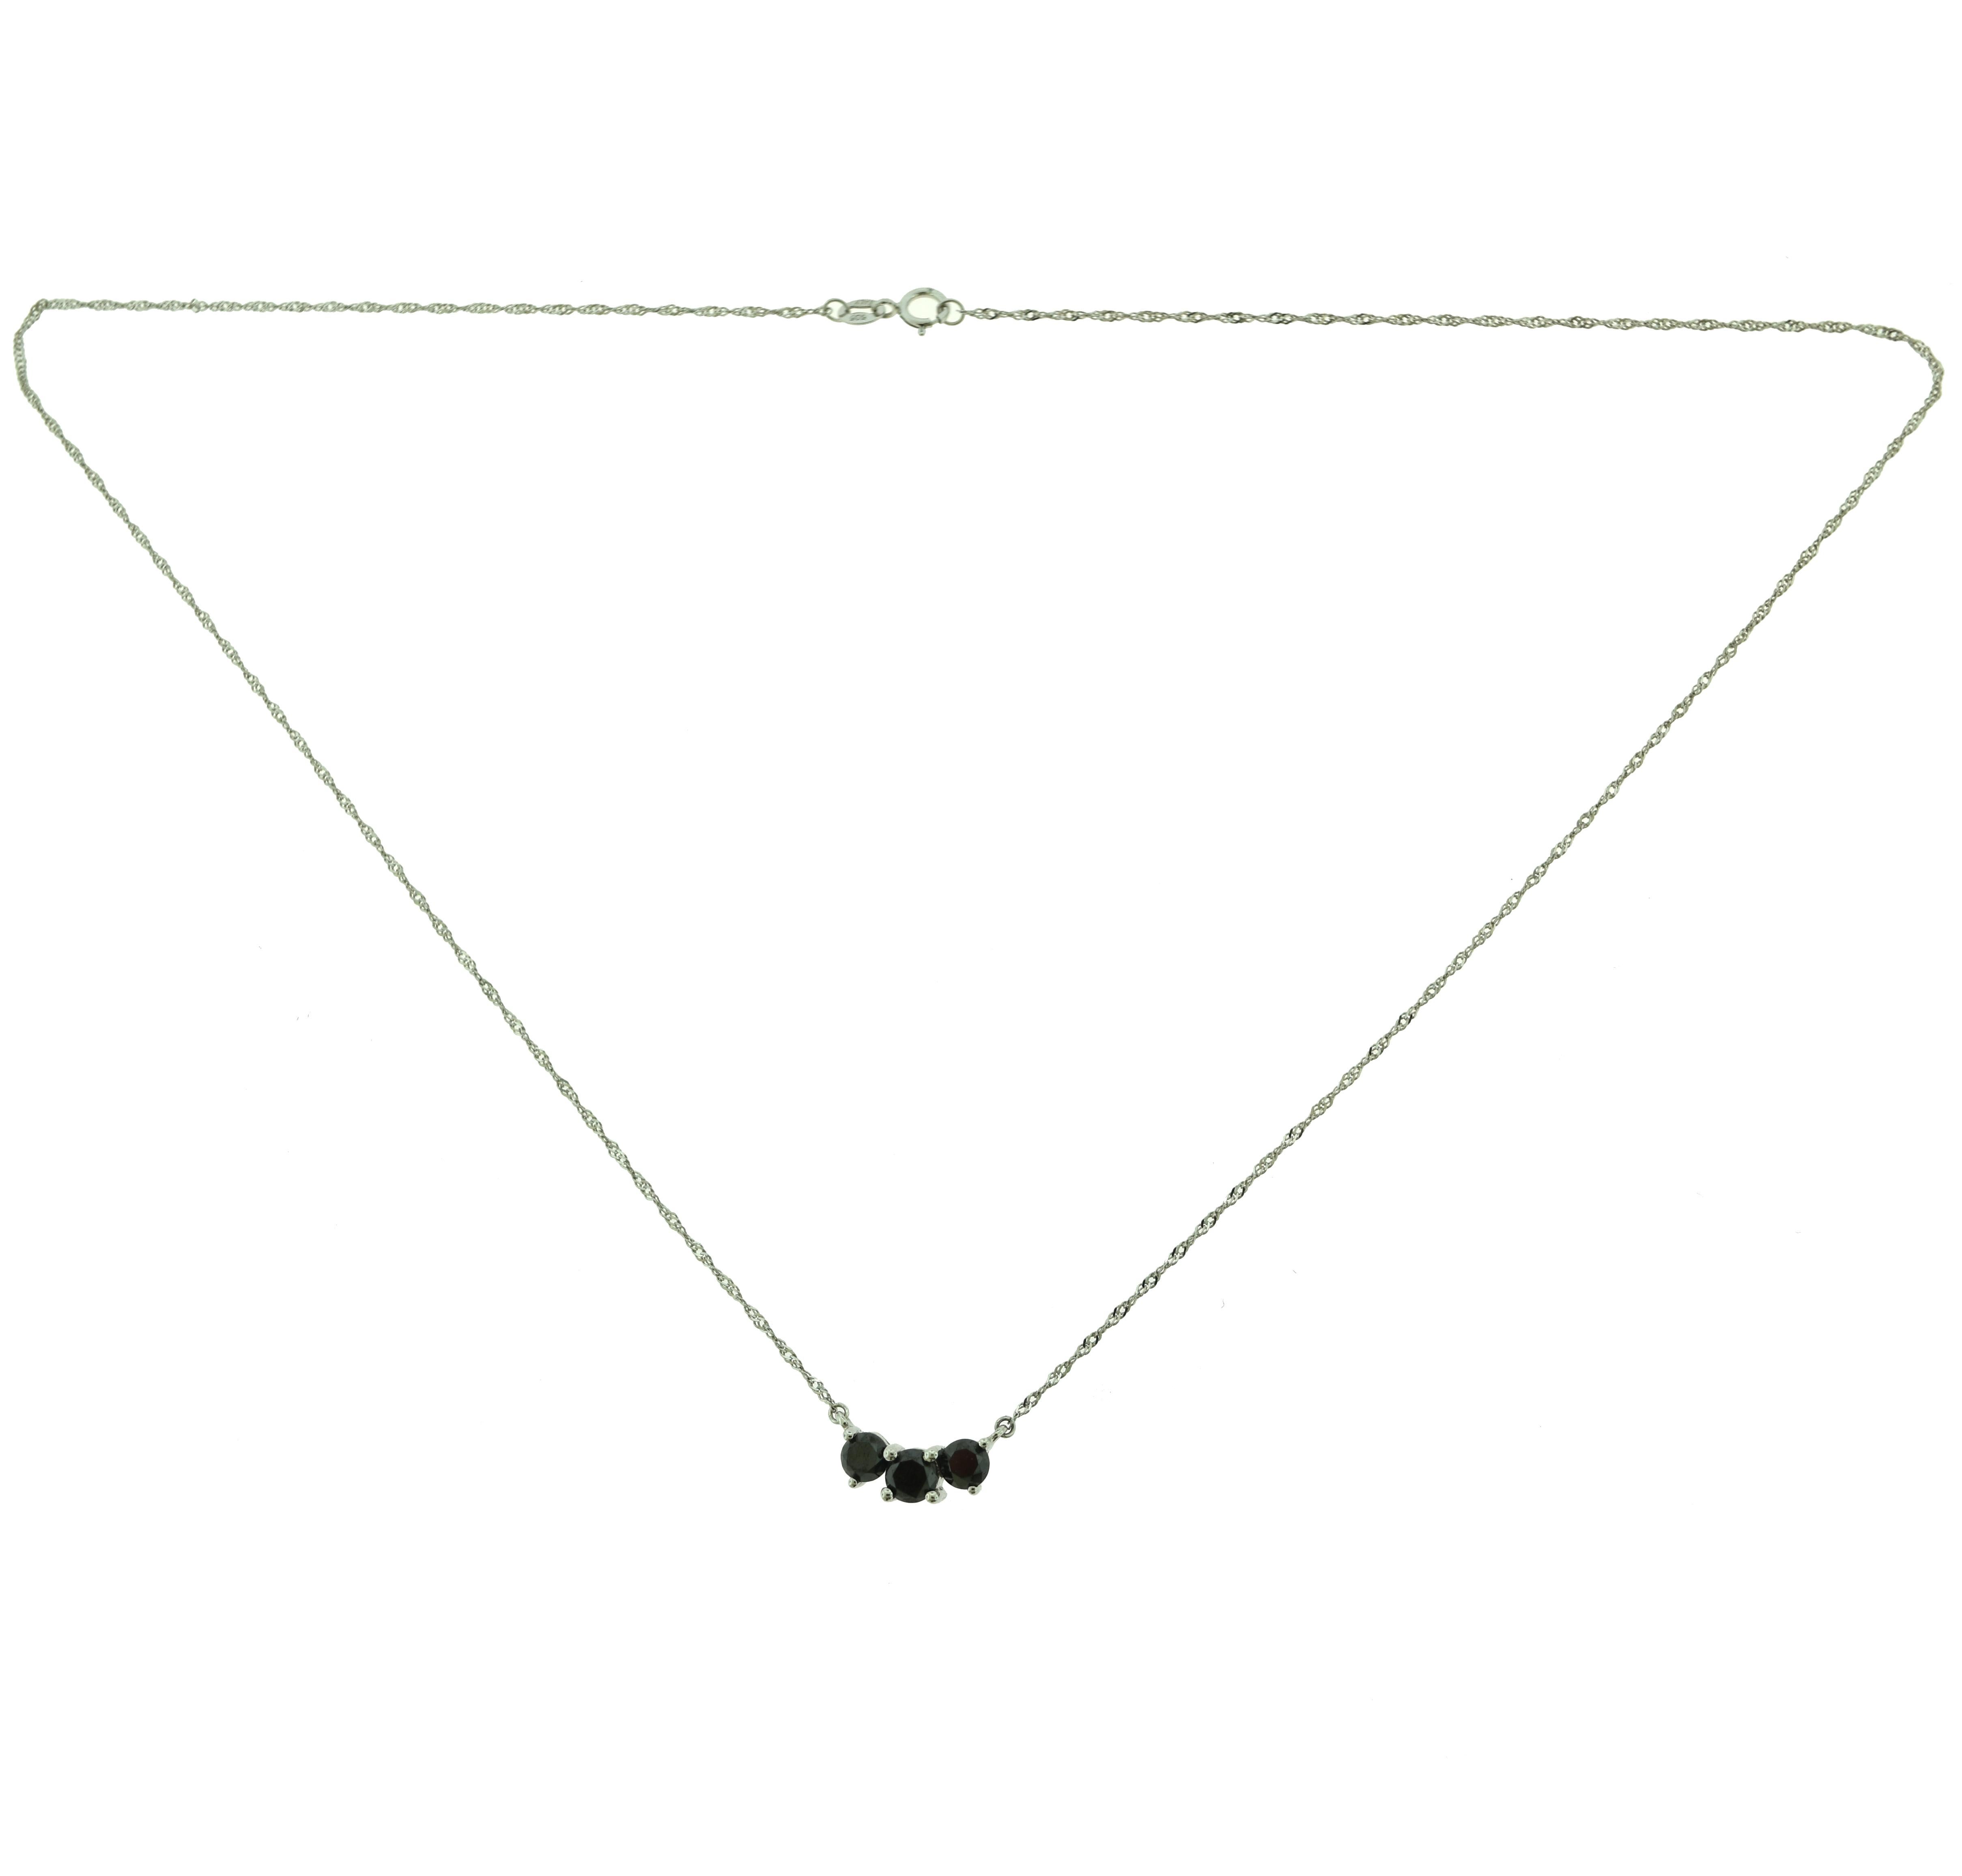 Sapphire in White Gold Pendant Necklace In Good Condition For Sale In Miami, FL